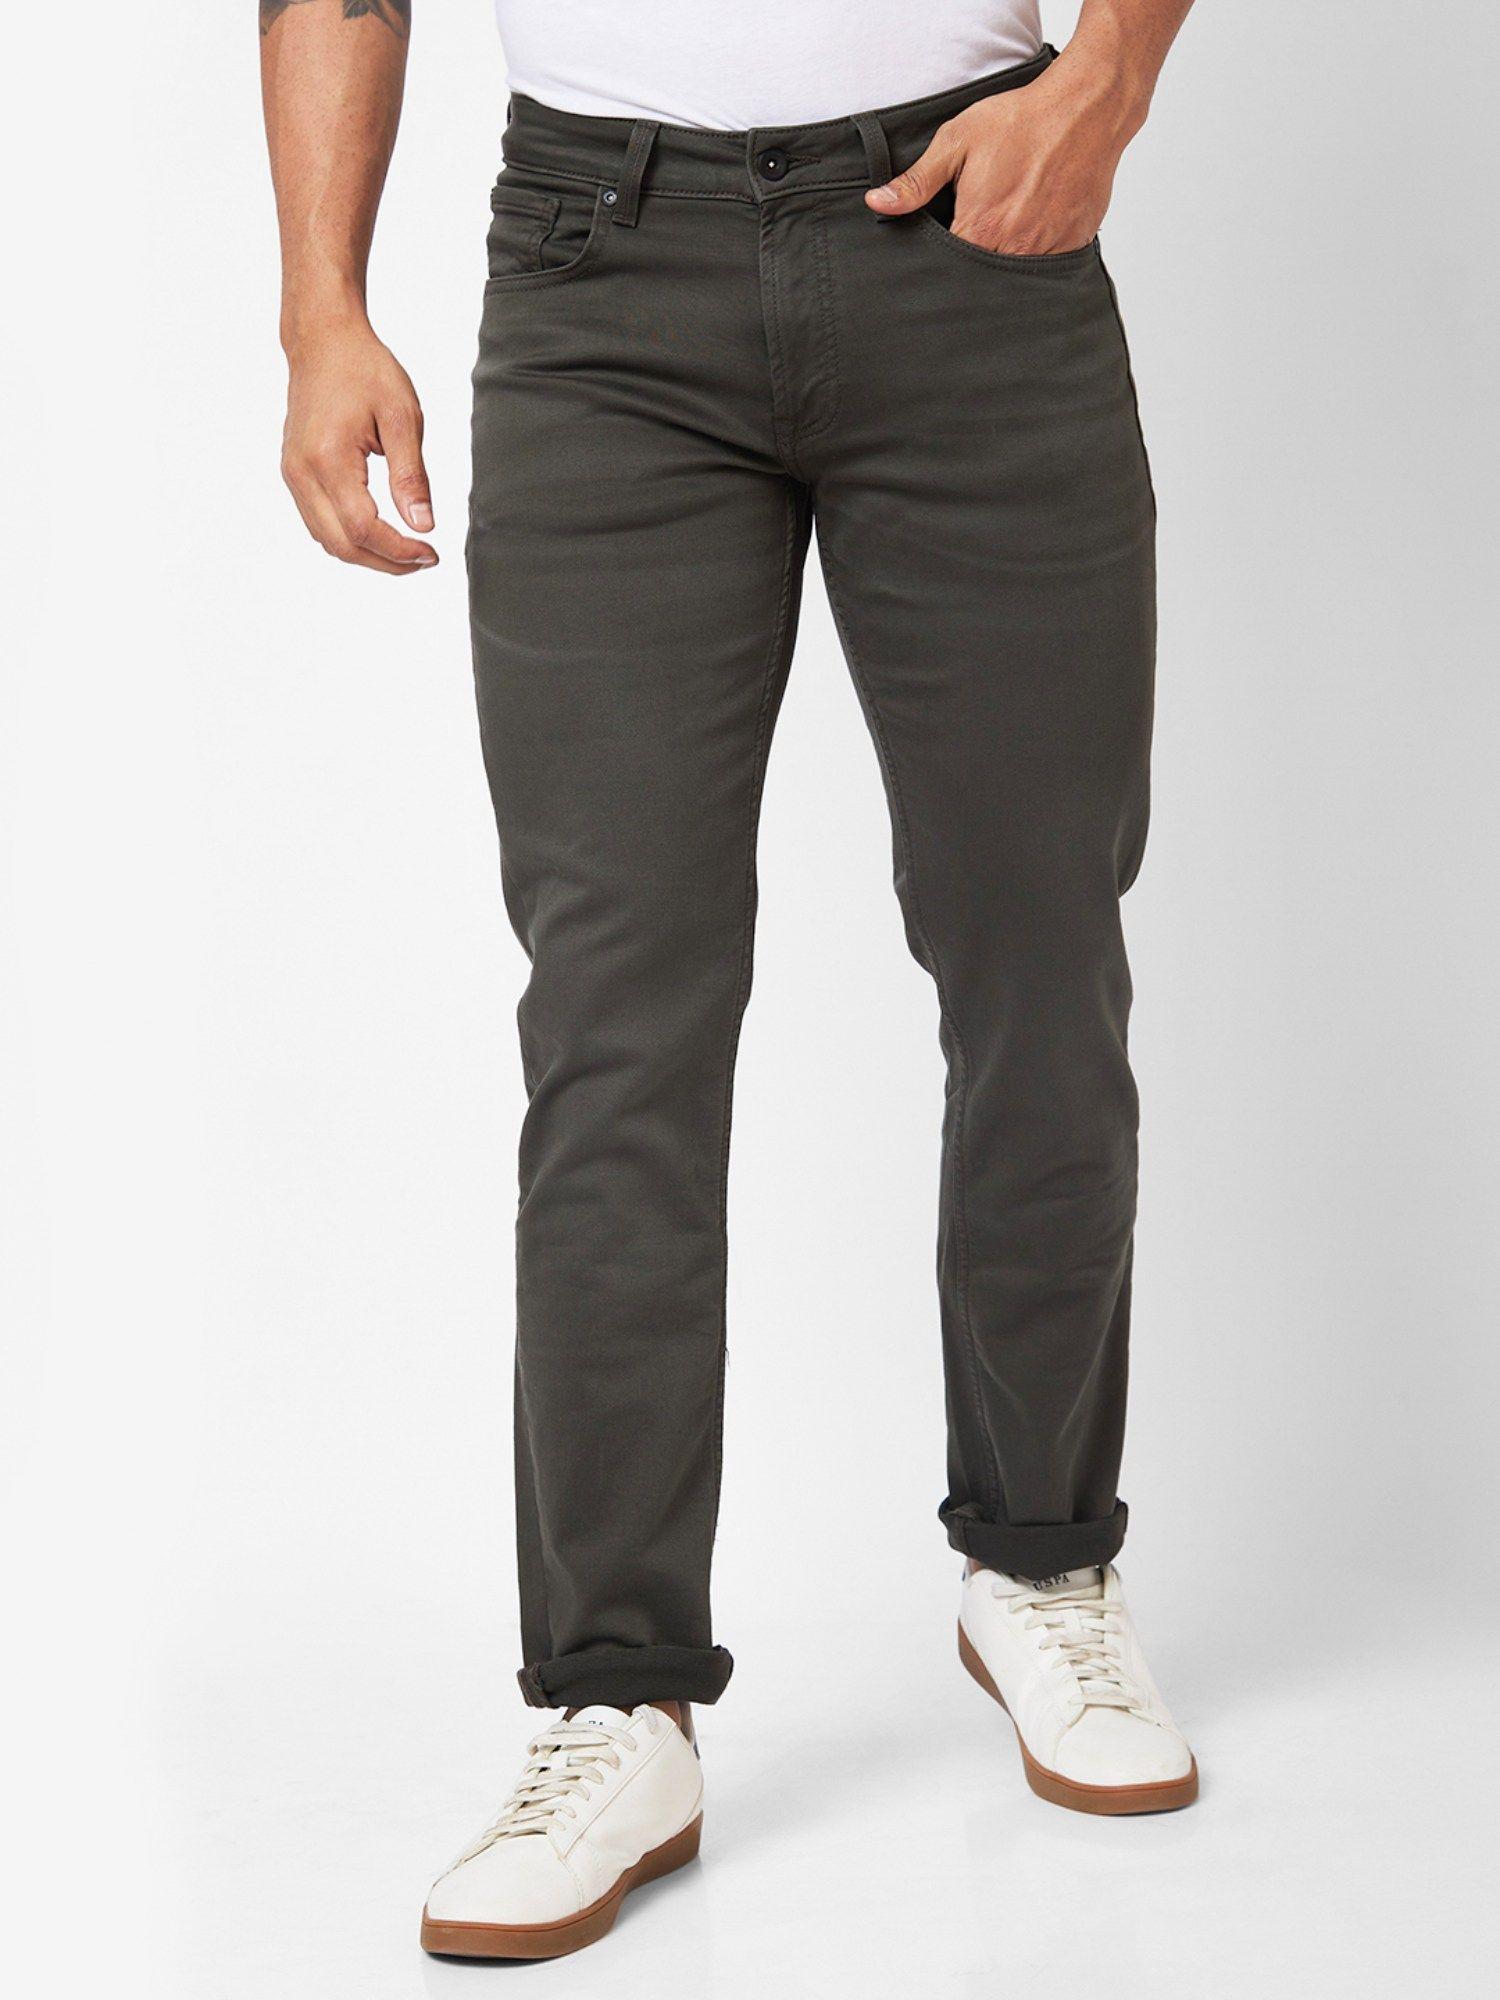 mid-rise regular fit green jeans for men